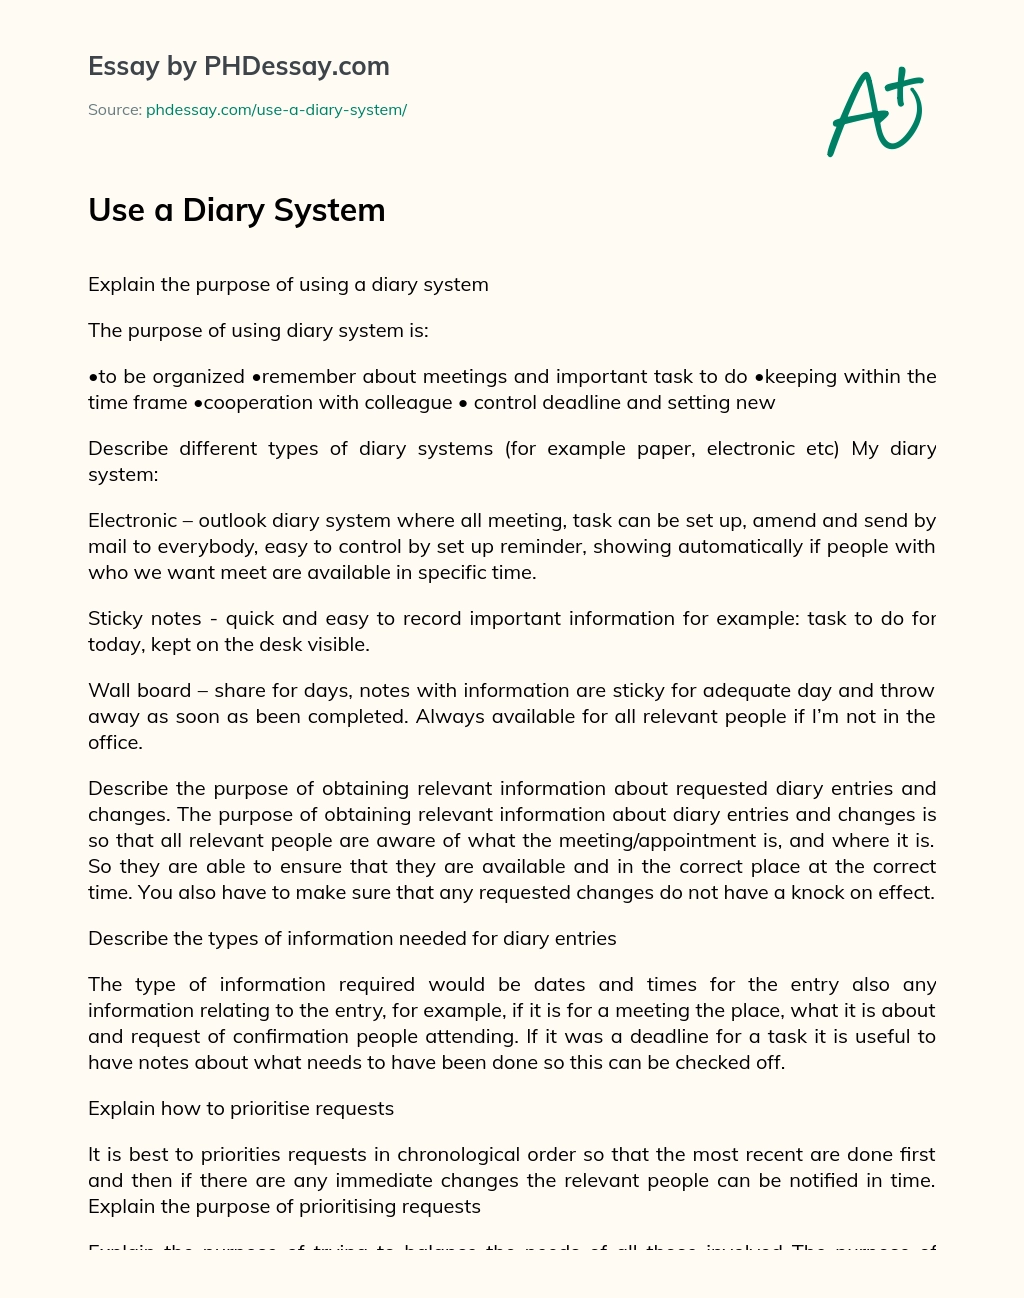 Use a Diary System essay